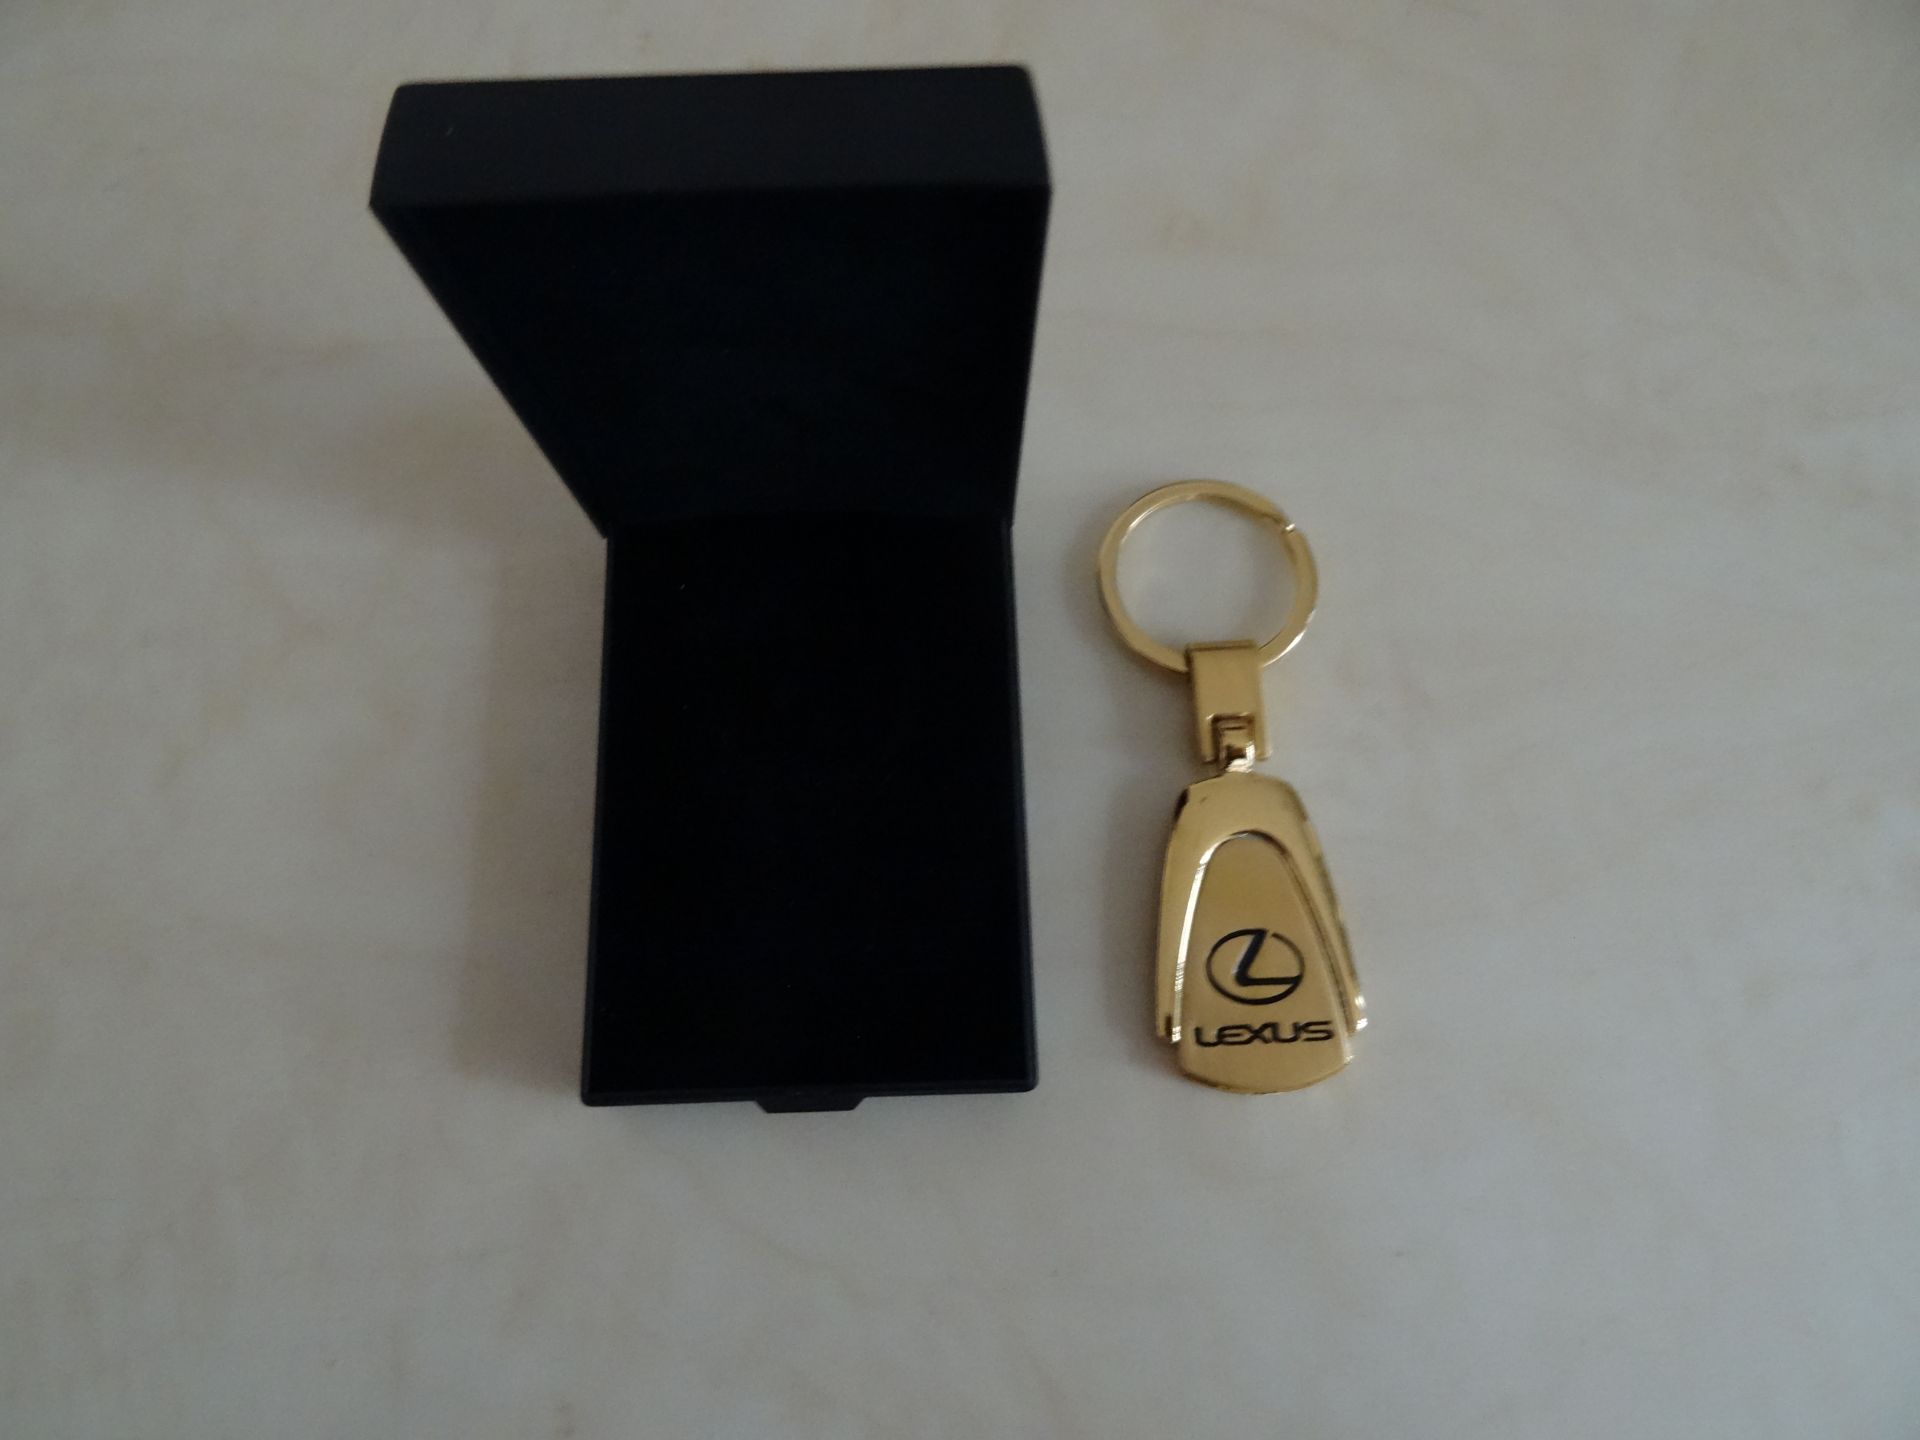 24ct Gold Plated Lexus Logo Keyring in Luxury Gift Box x 1 Unit - Image 2 of 3